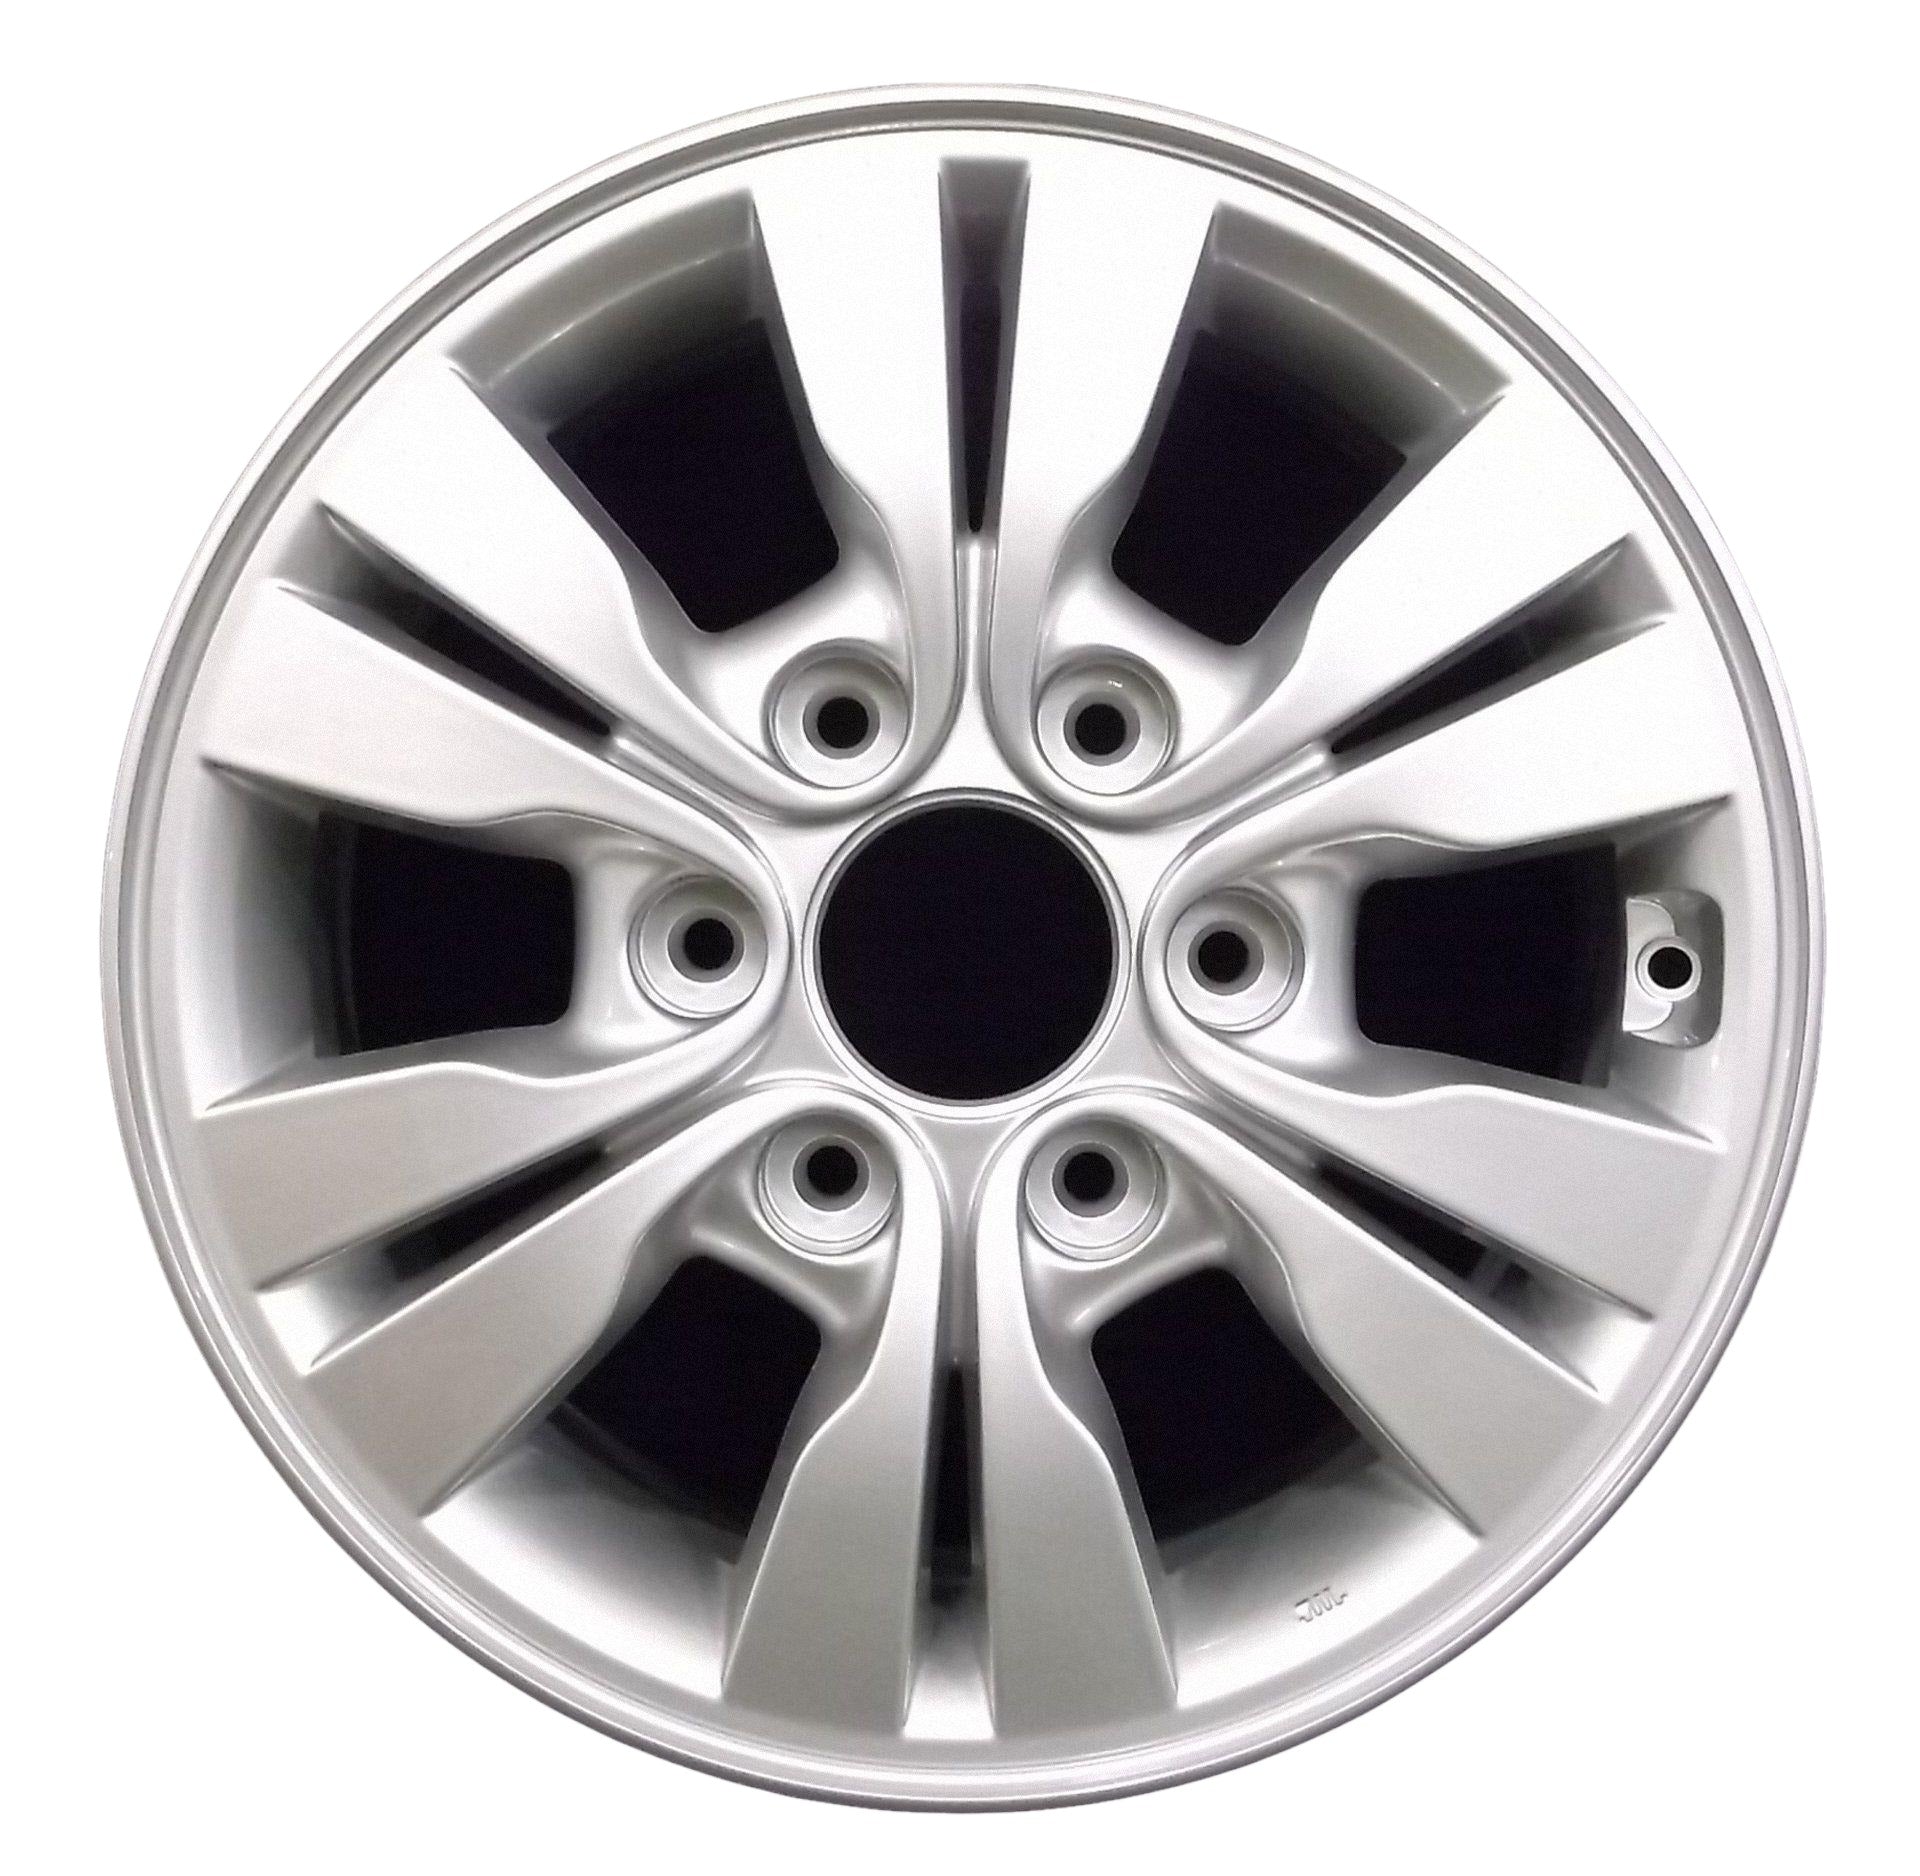 Kia Sedona  2006, 2007, 2008, 2009, 2010, 2011, 2012 Factory OEM Car Wheel Size 16x6.5 Alloy WAO.74627.LS09.FF